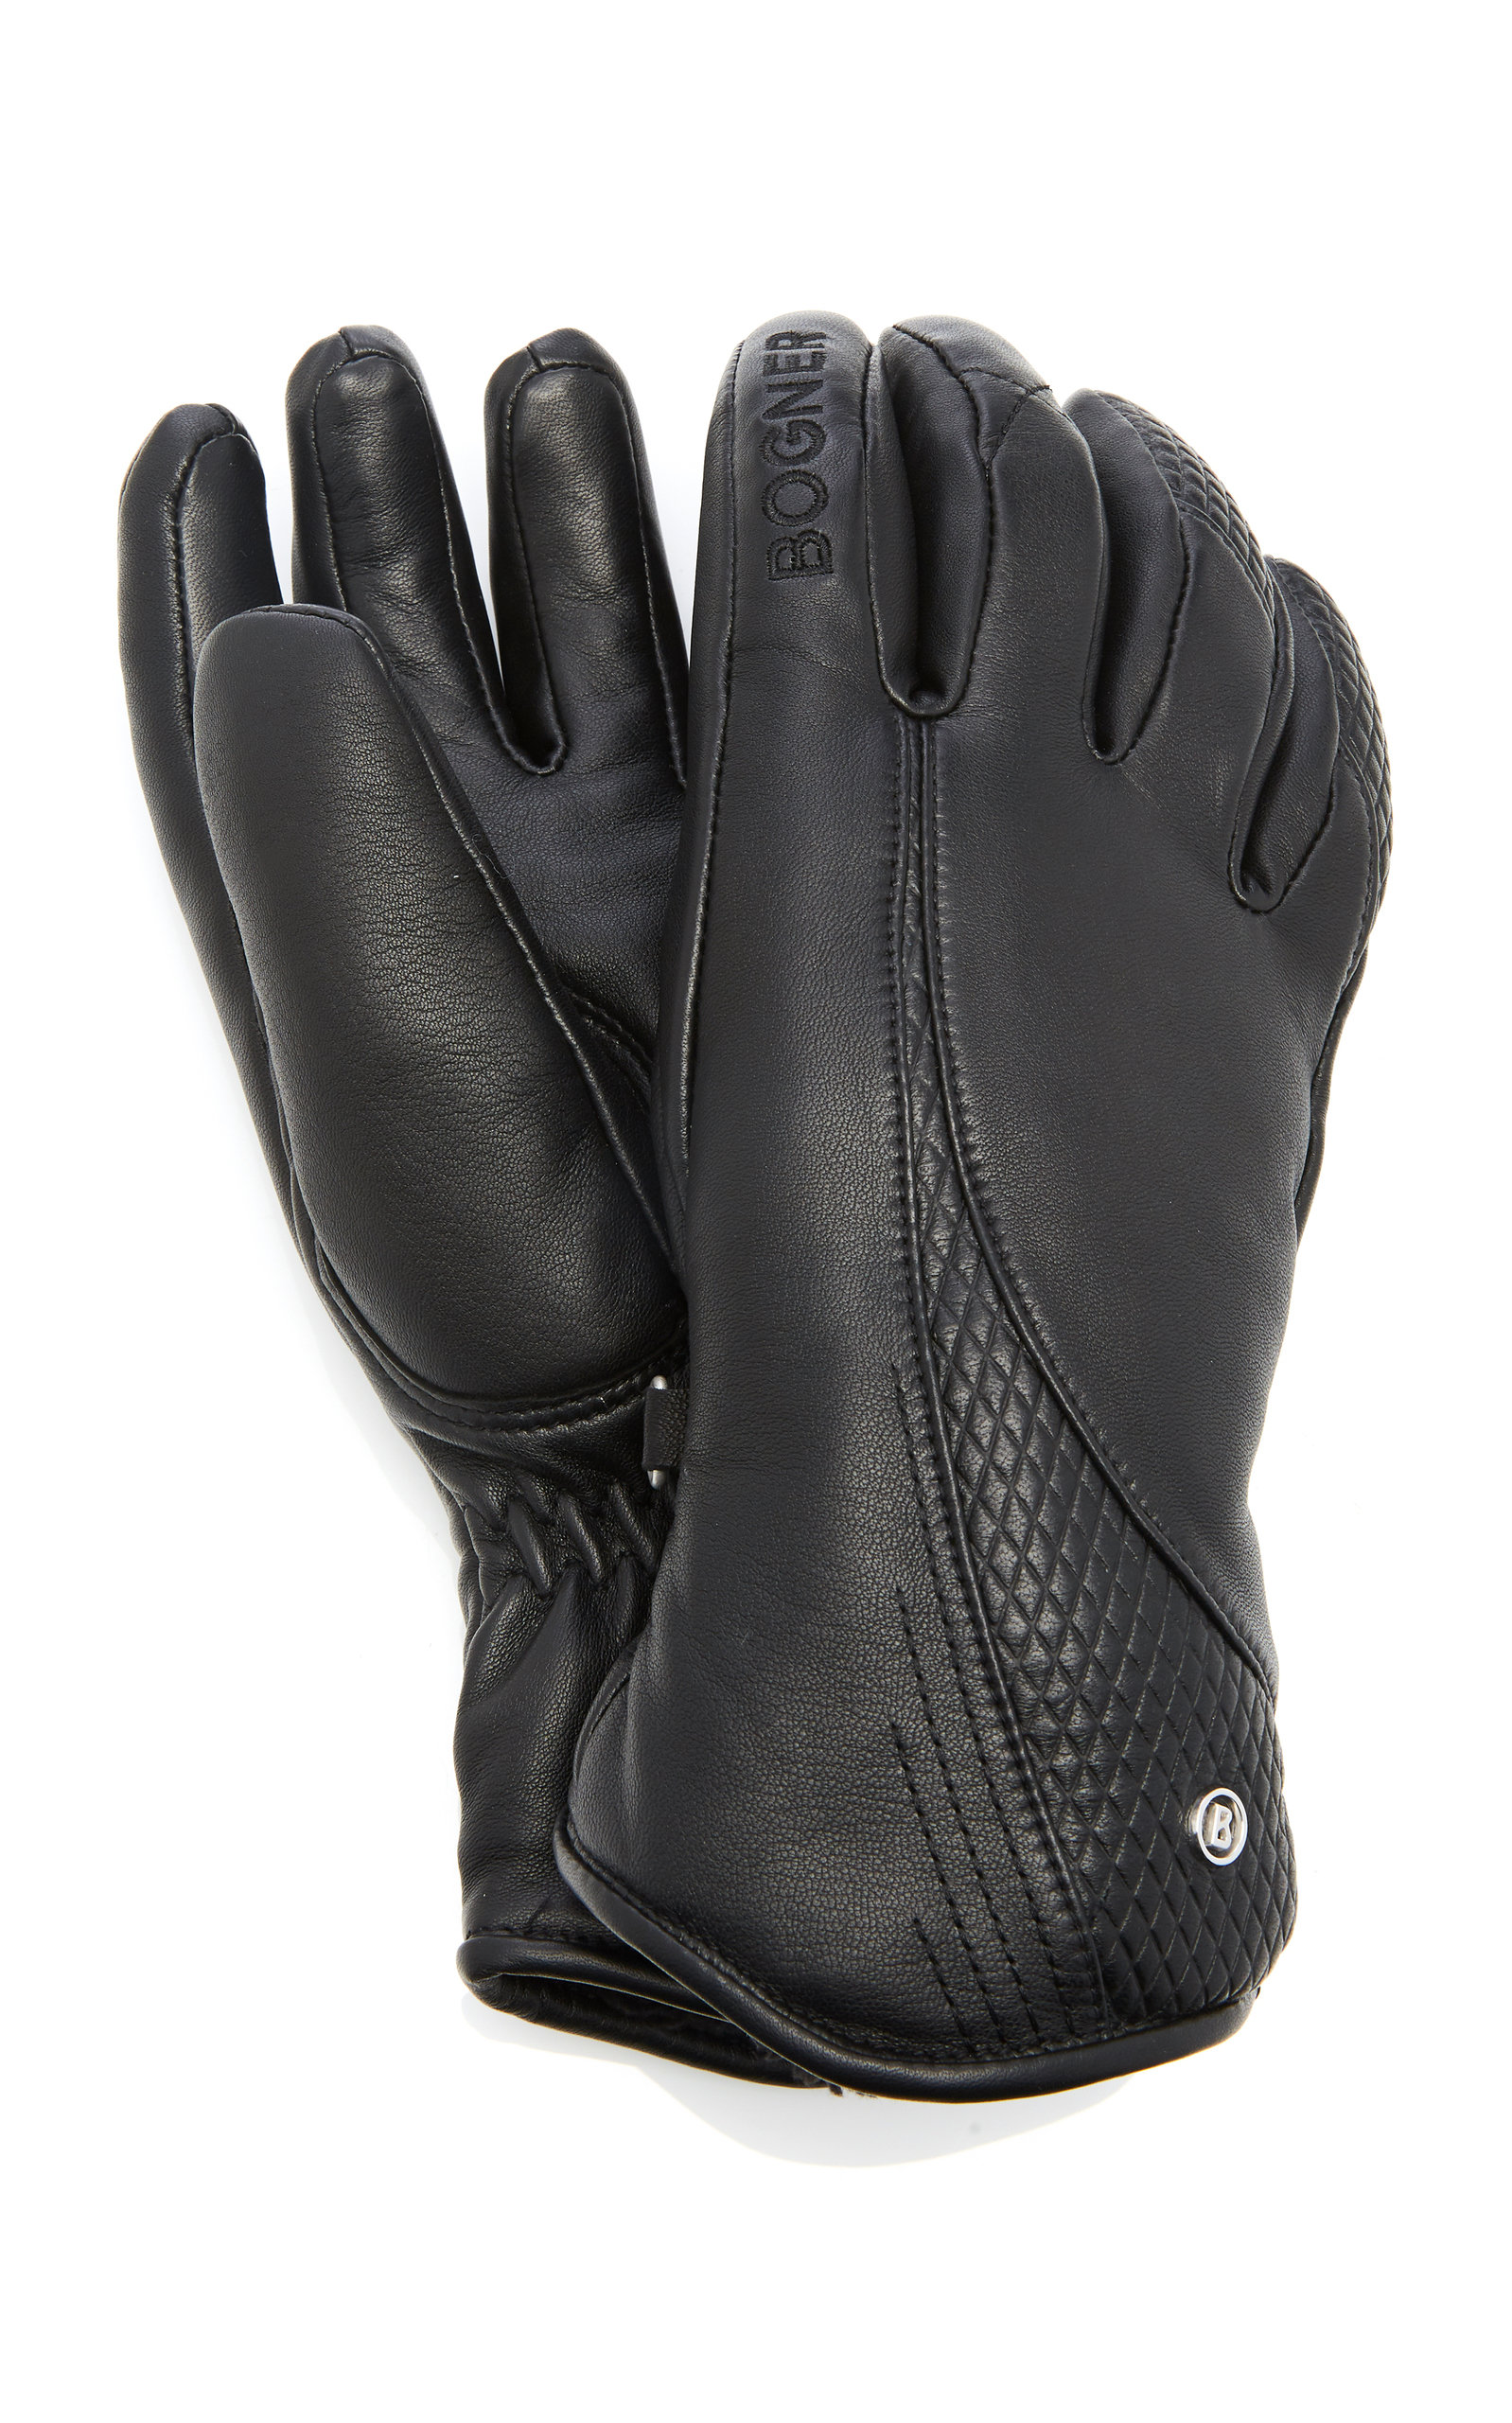 leather ski gloves womens